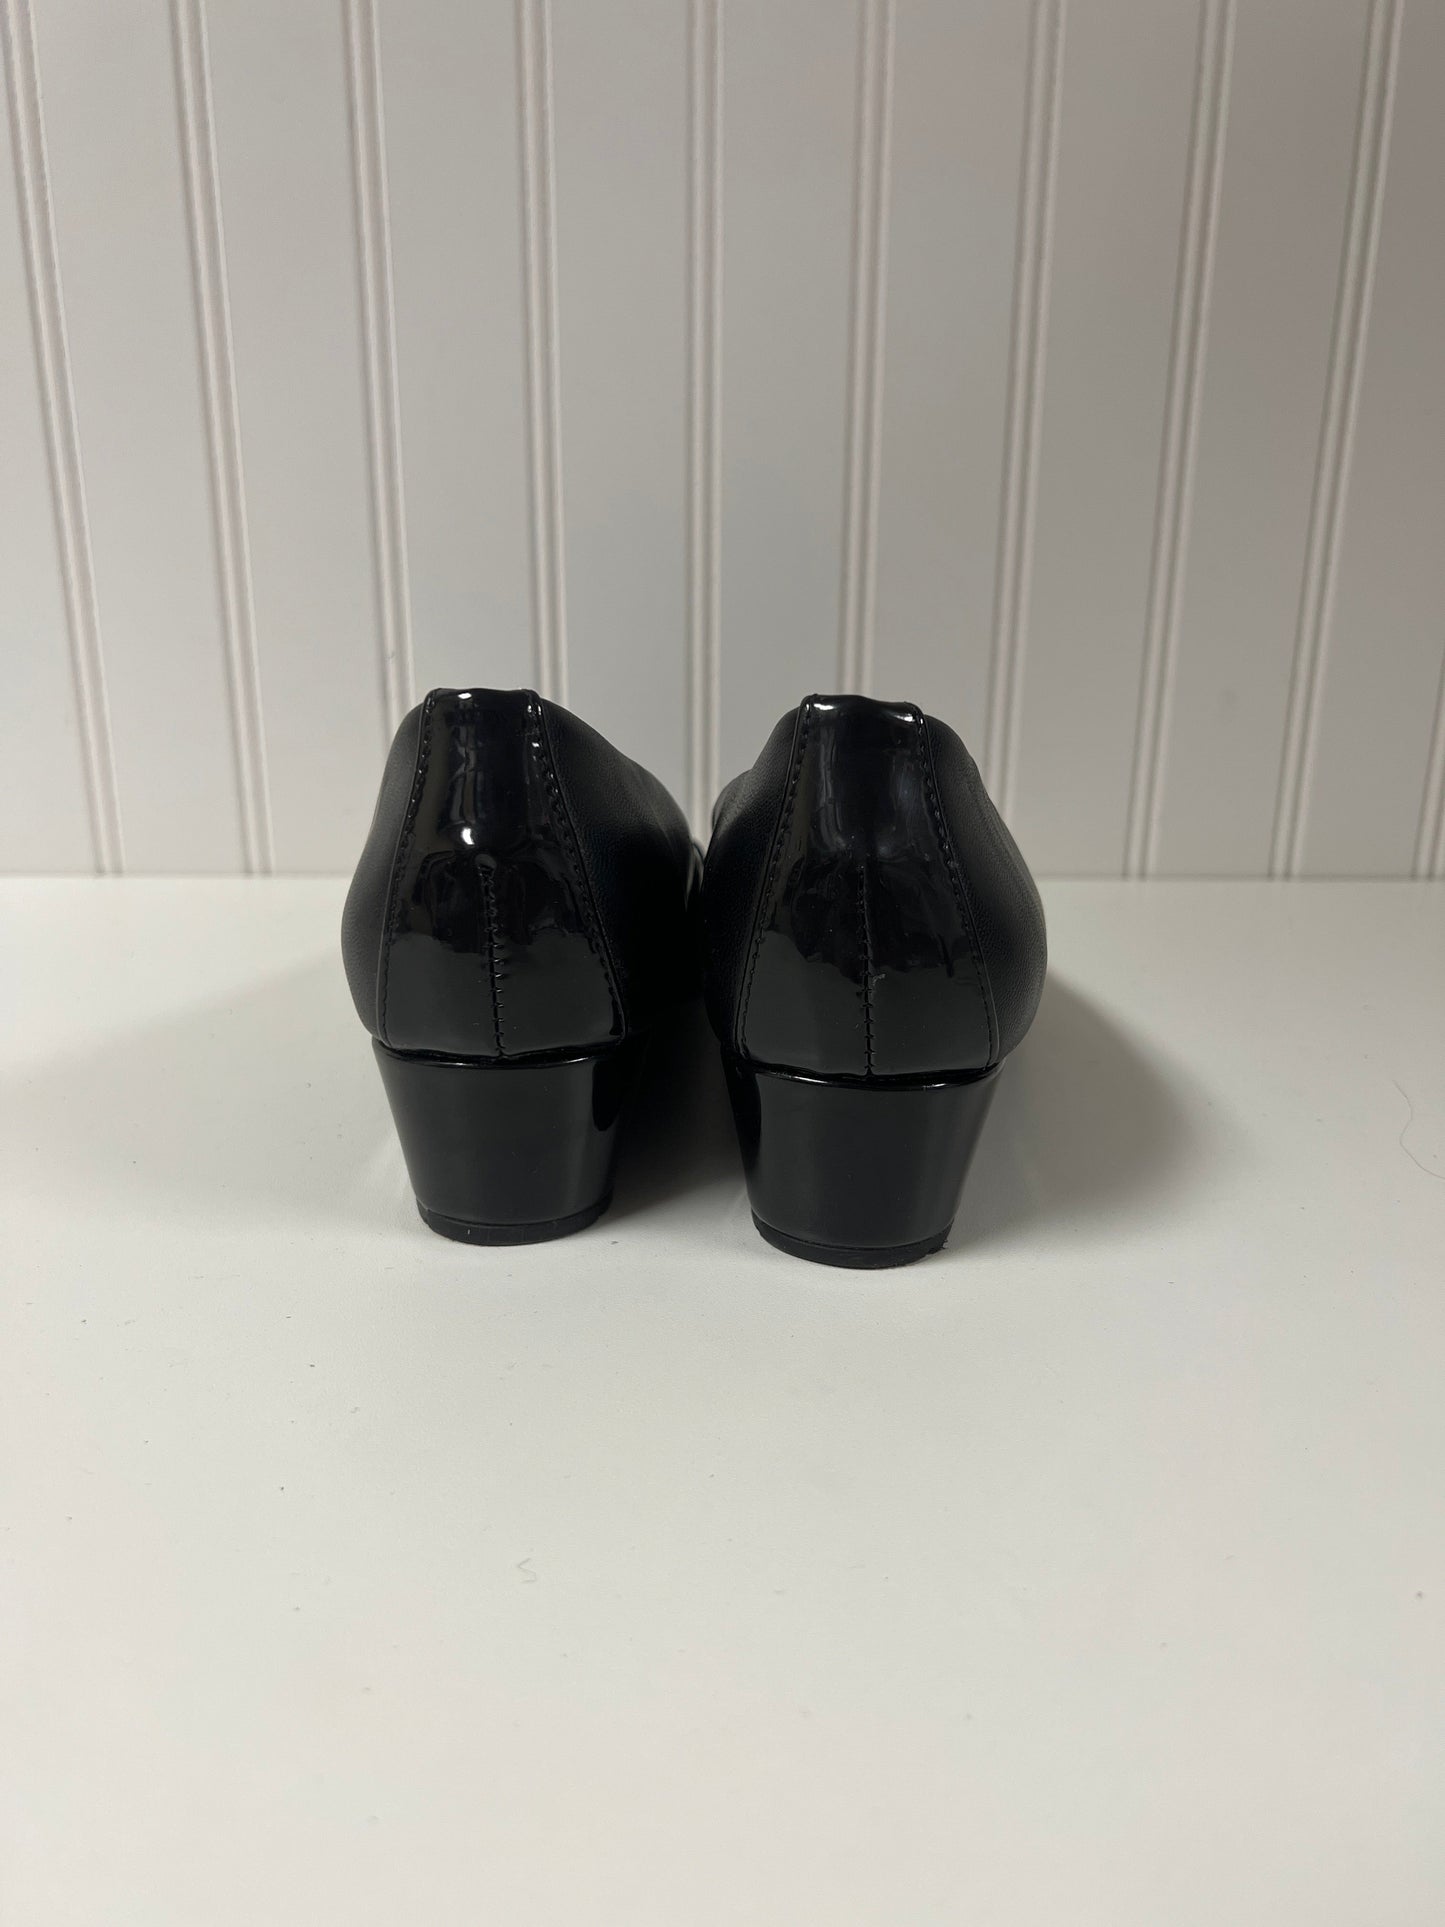 Black Shoes Heels Wedge Anne Klein, Size 5.5